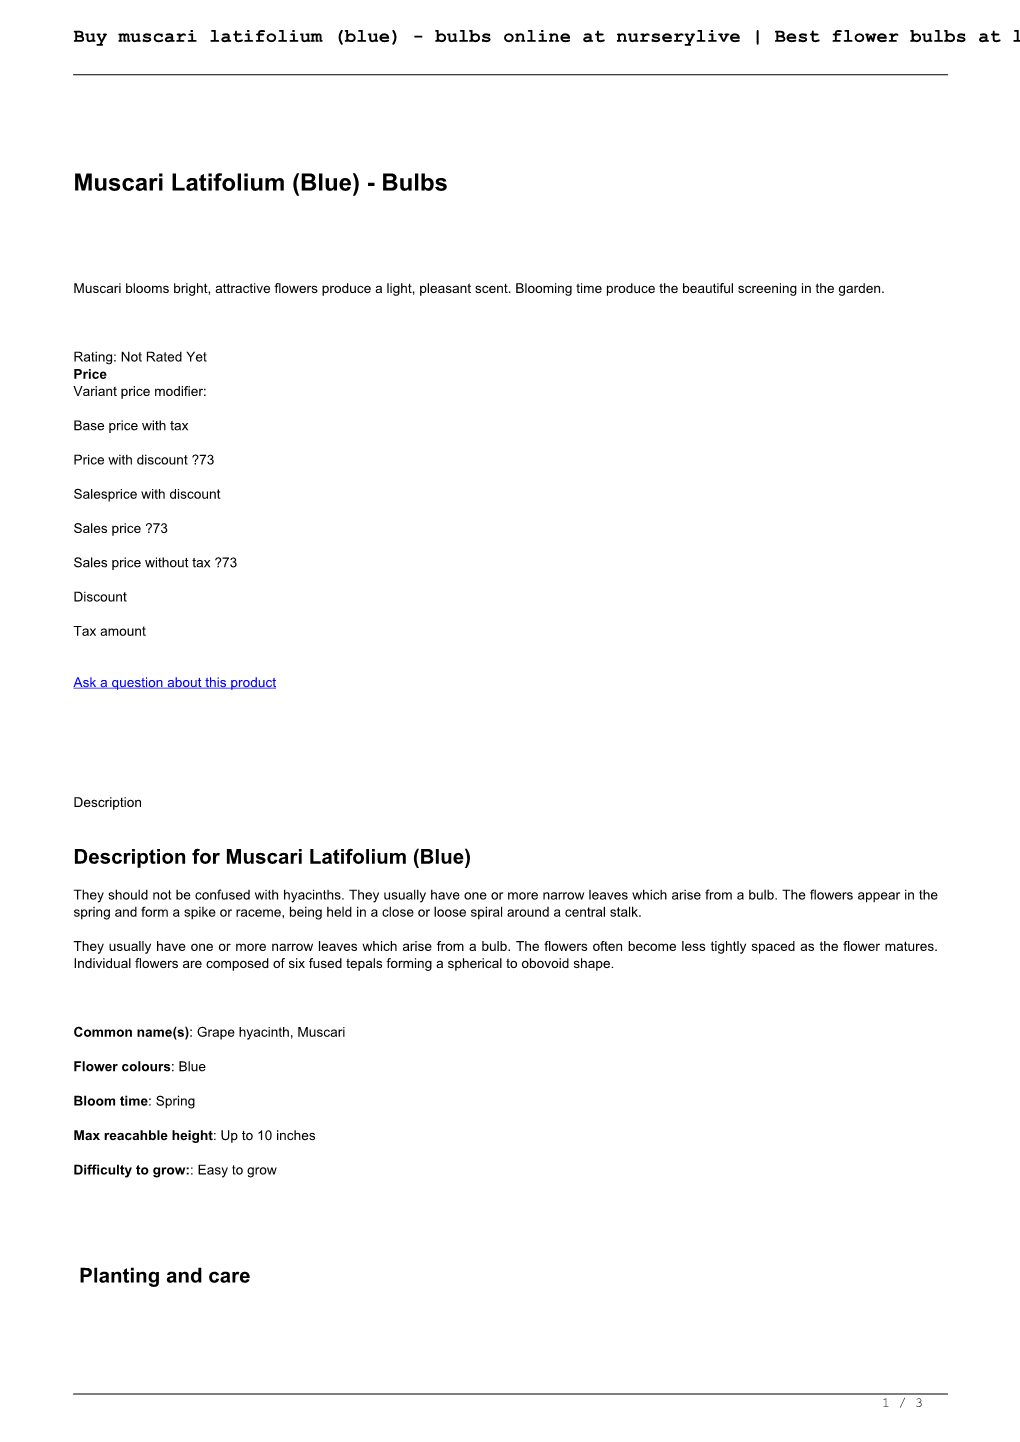 Buy Muscari Latifolium (Blue) - Bulbs Online at Nurserylive | Best Flower Bulbs at Lowest Price